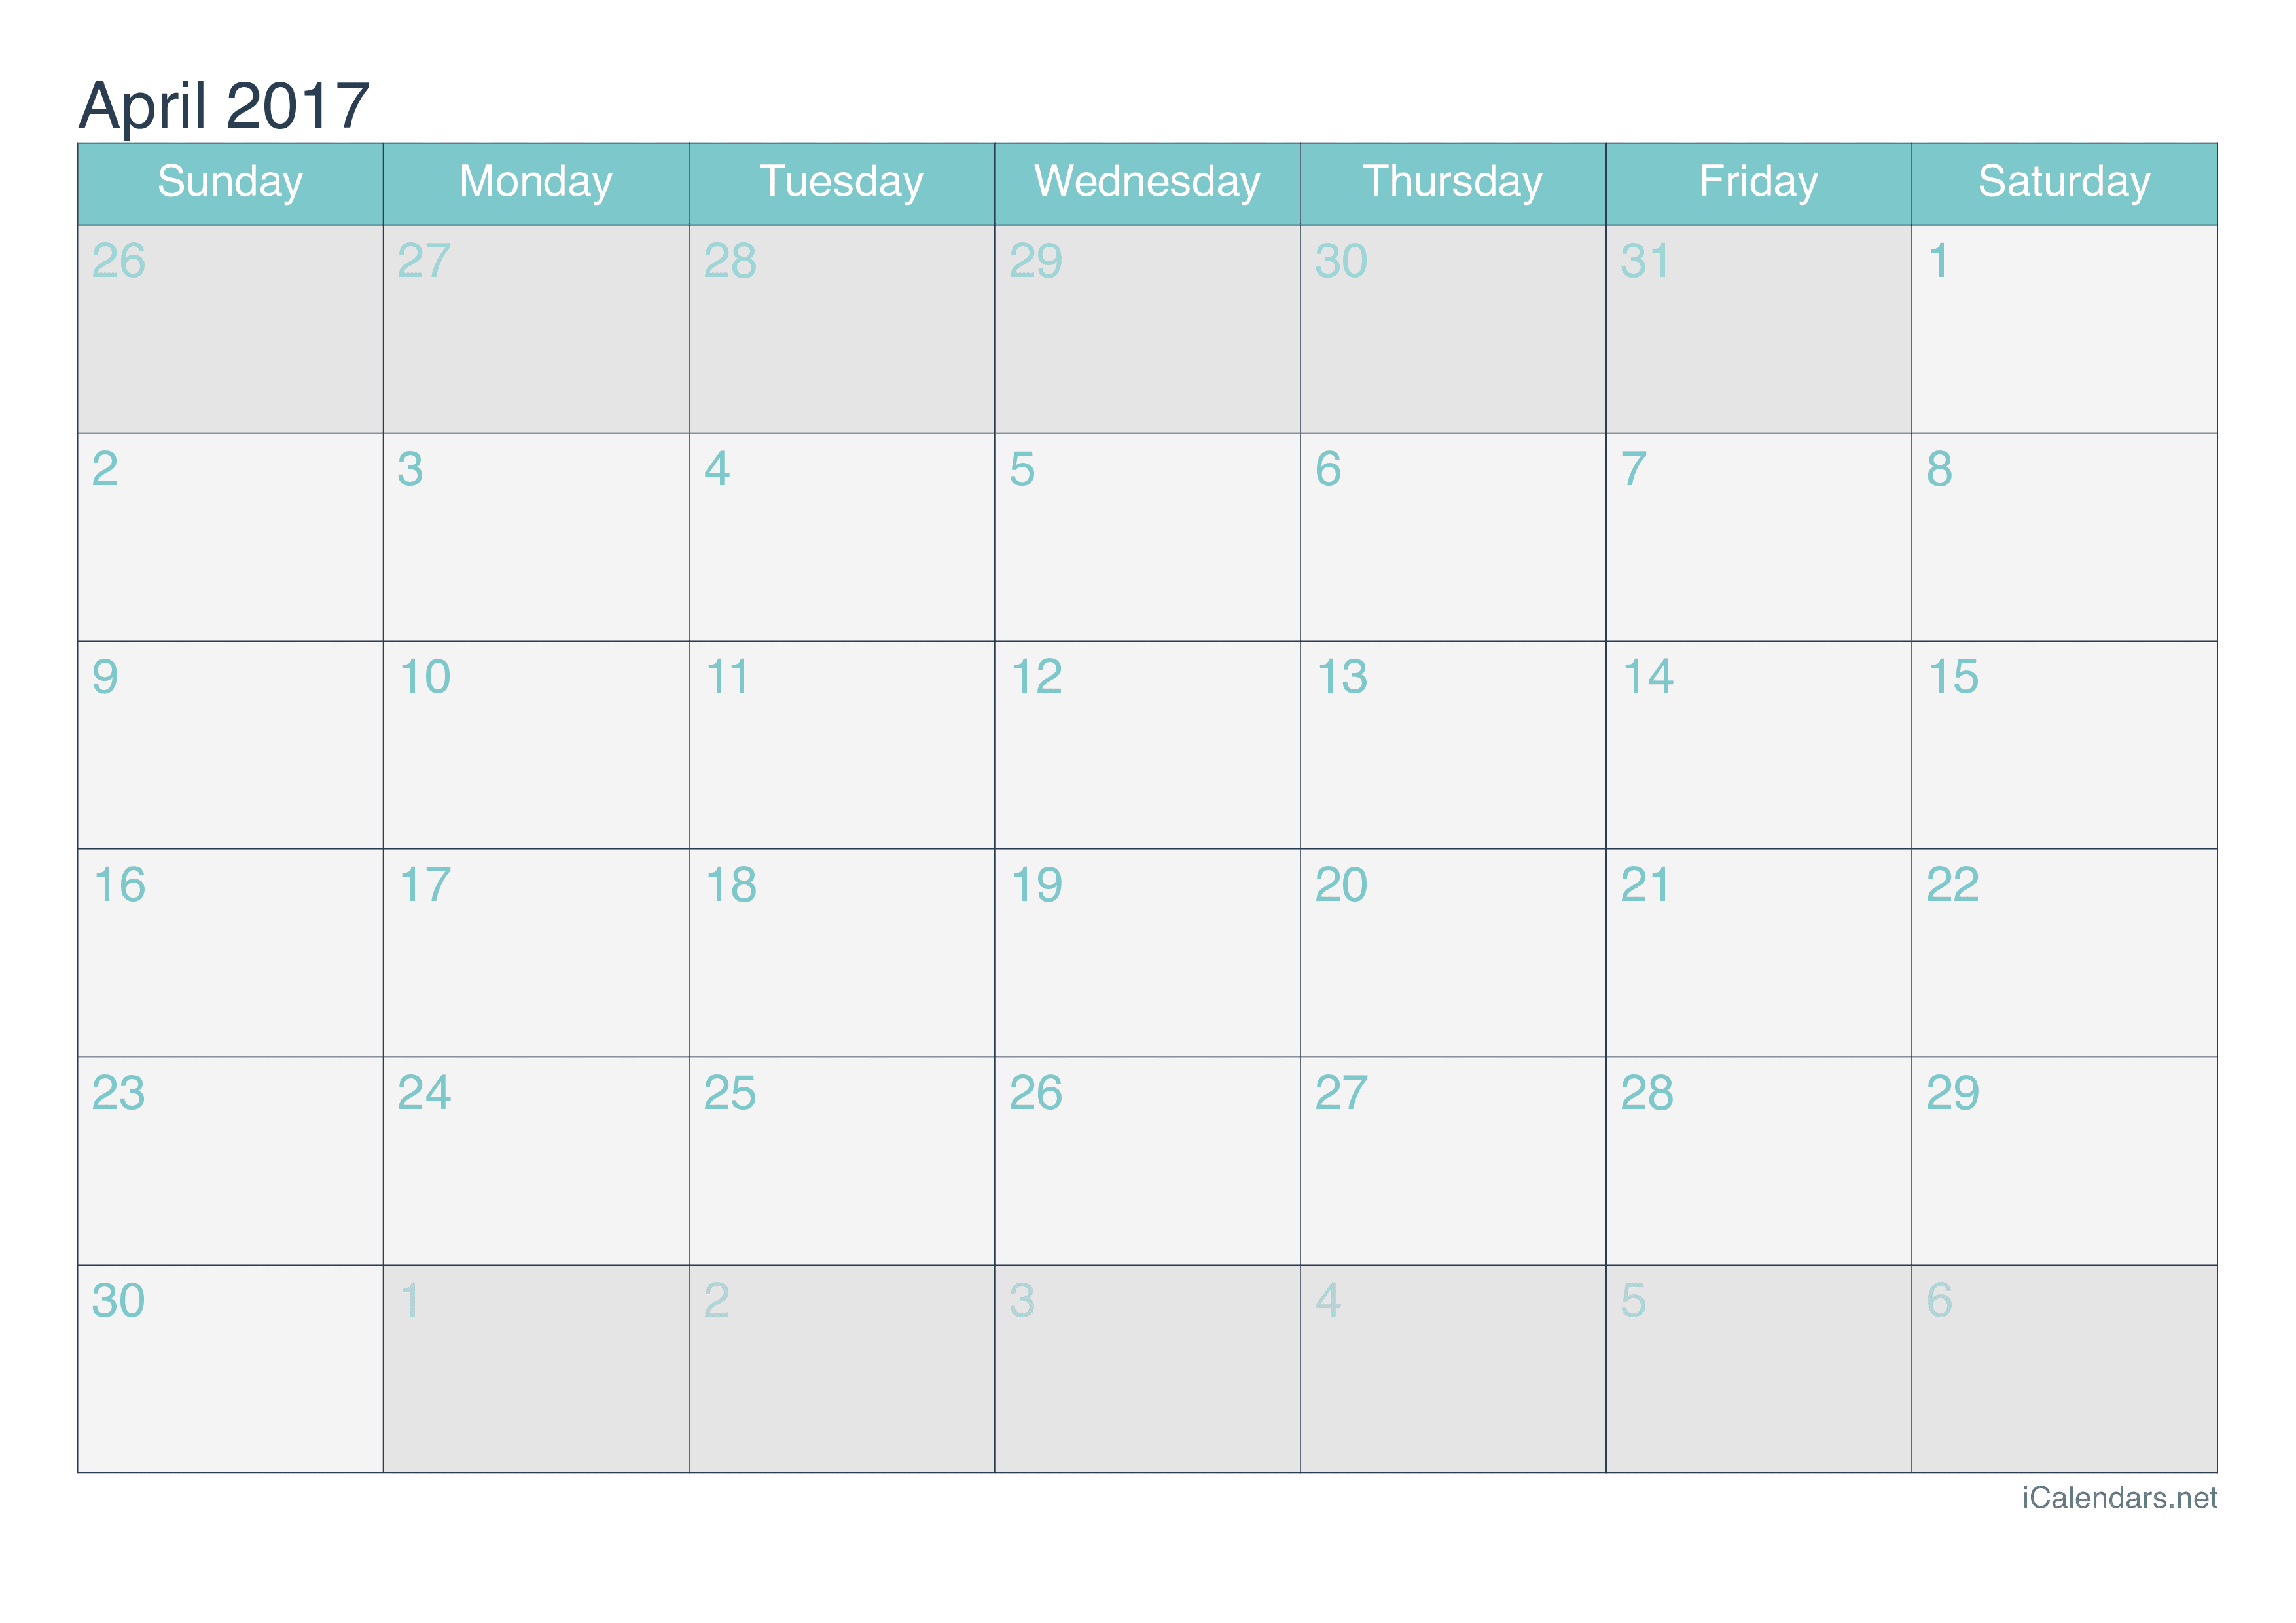 april-2017-printable-calendar-icalendars